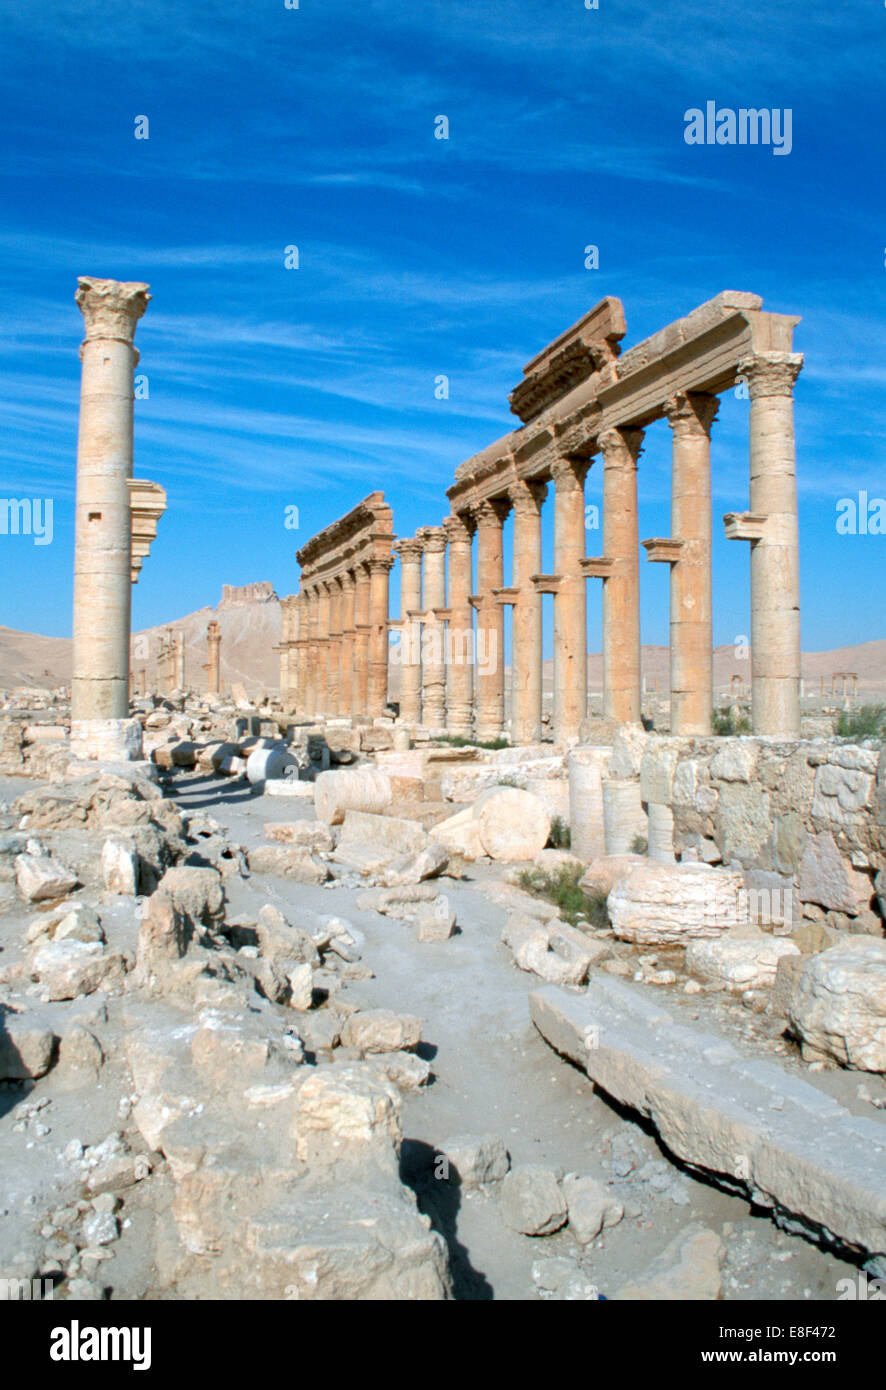 La rue Colonnade, Palmyra, Syrie. Banque D'Images